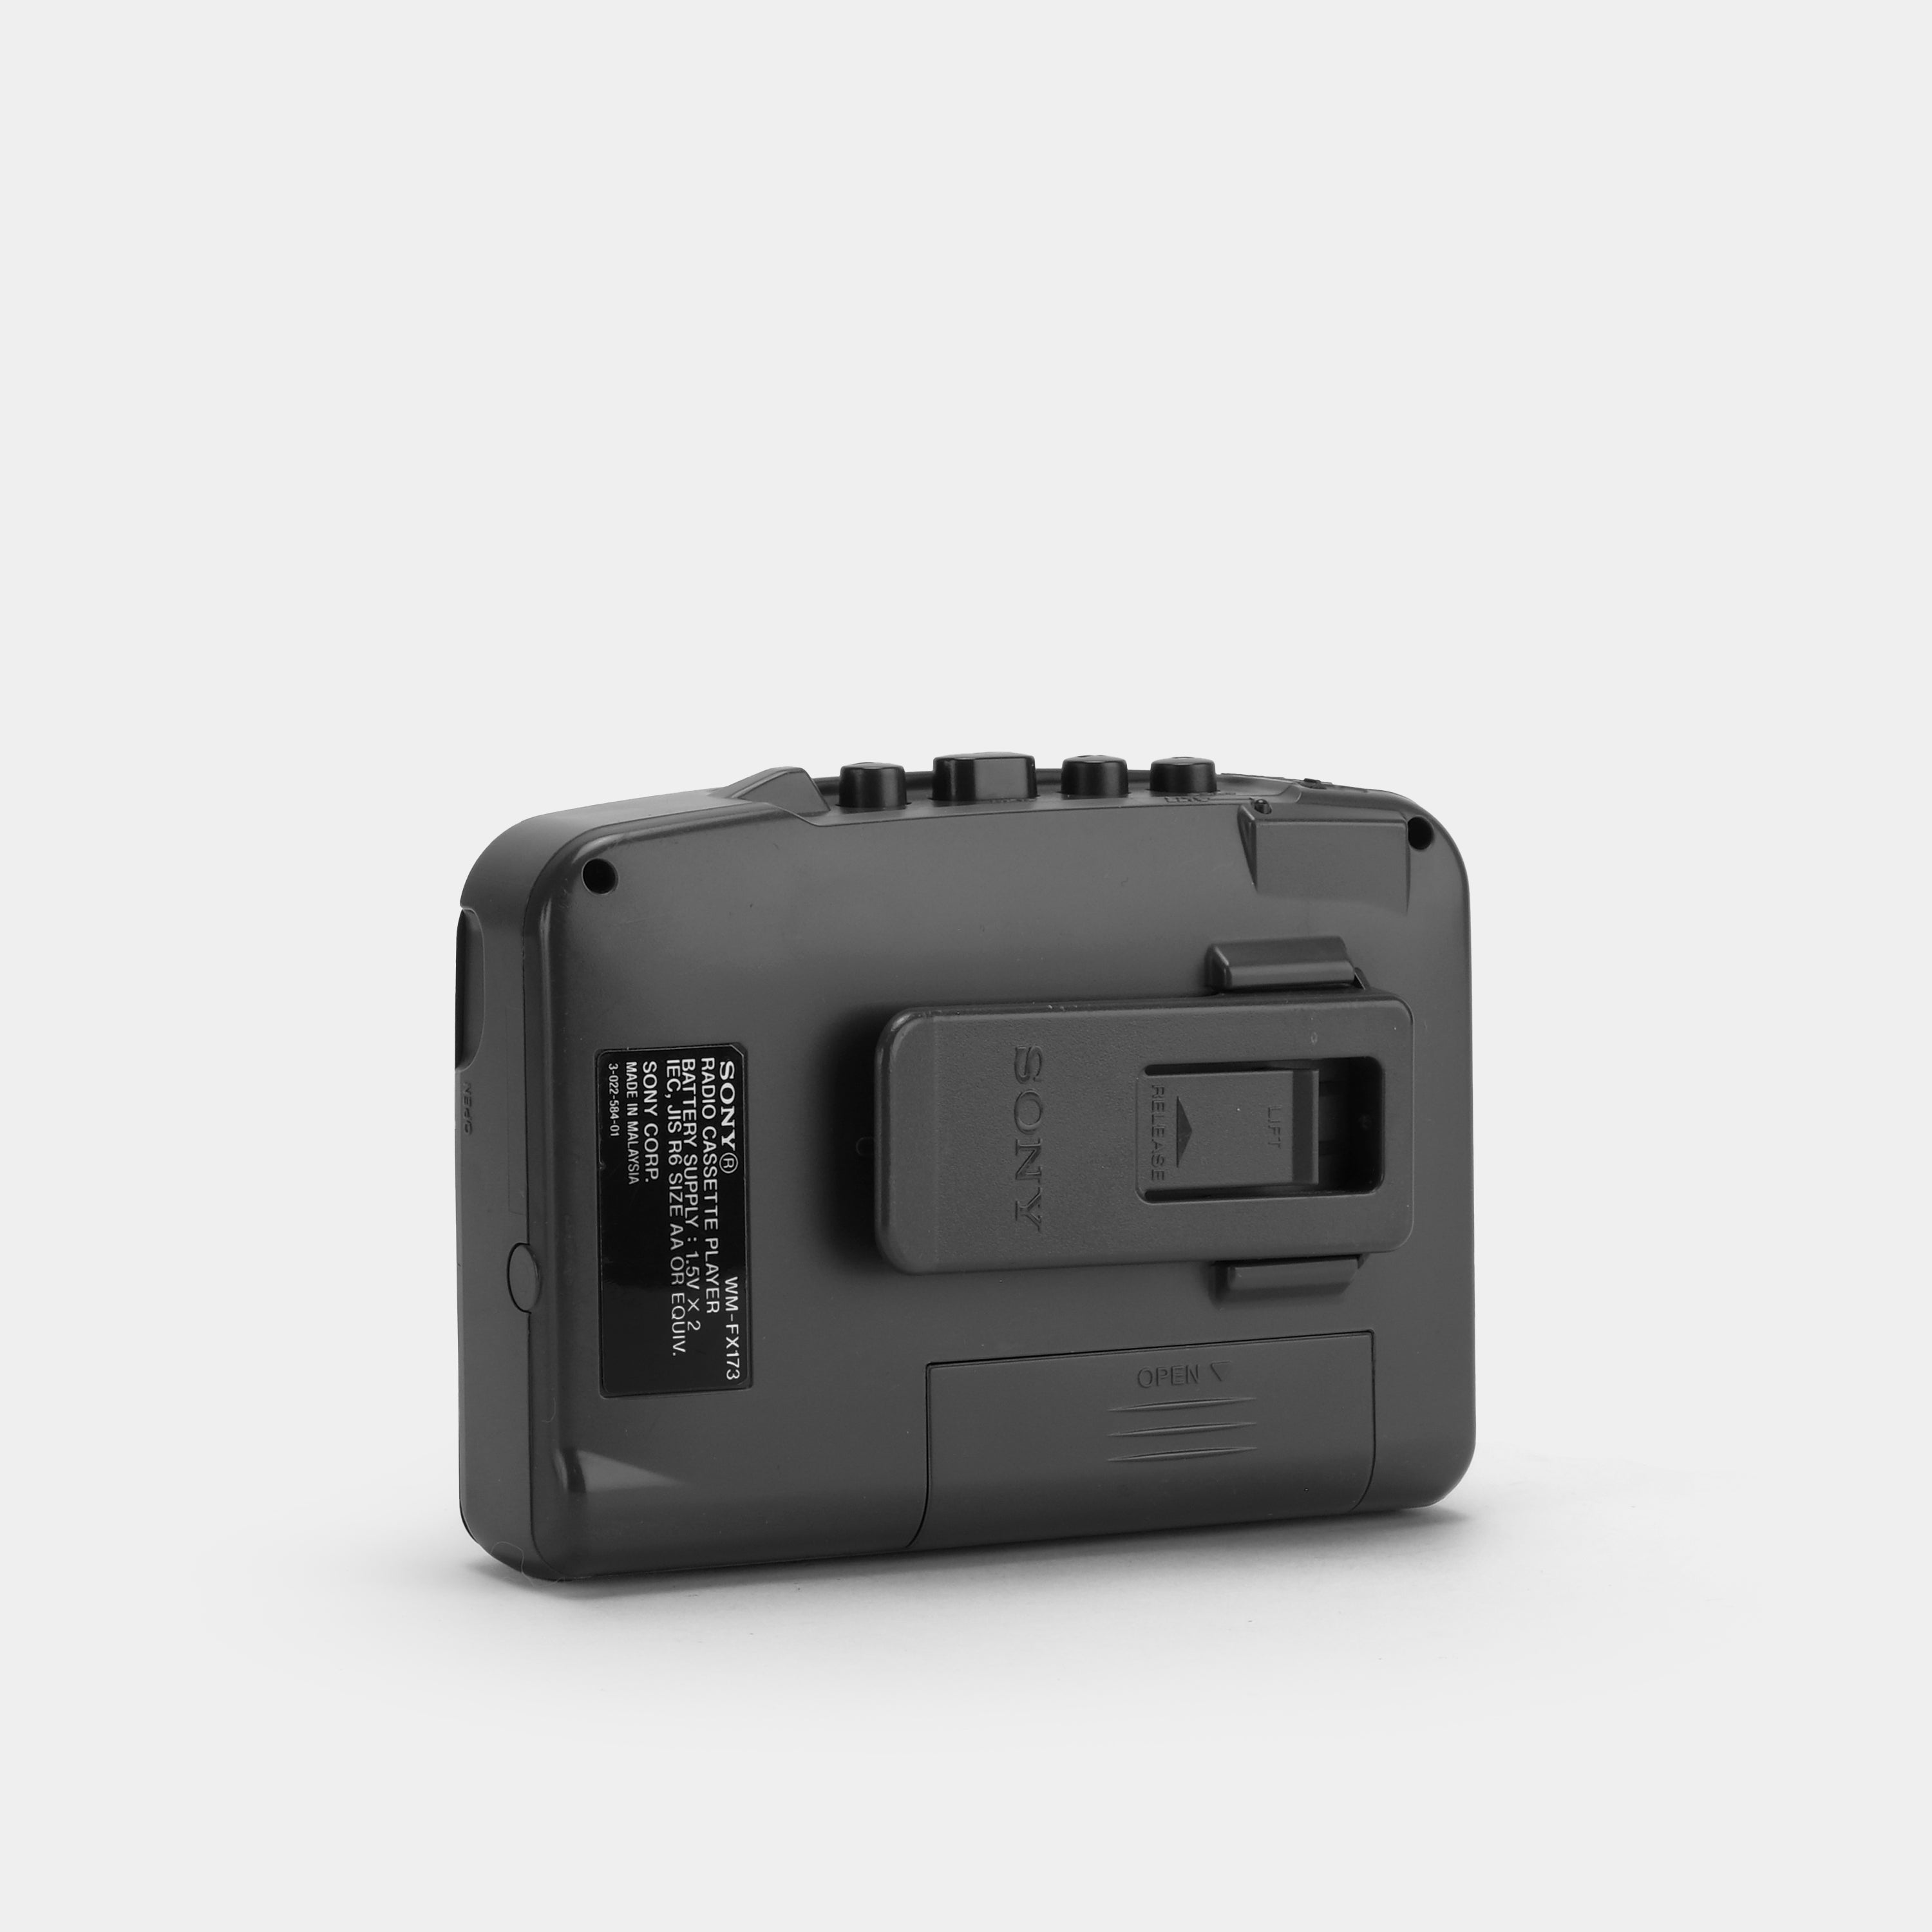 Sony Walkman WM-FX-173 AM/FM Portable Cassette Player